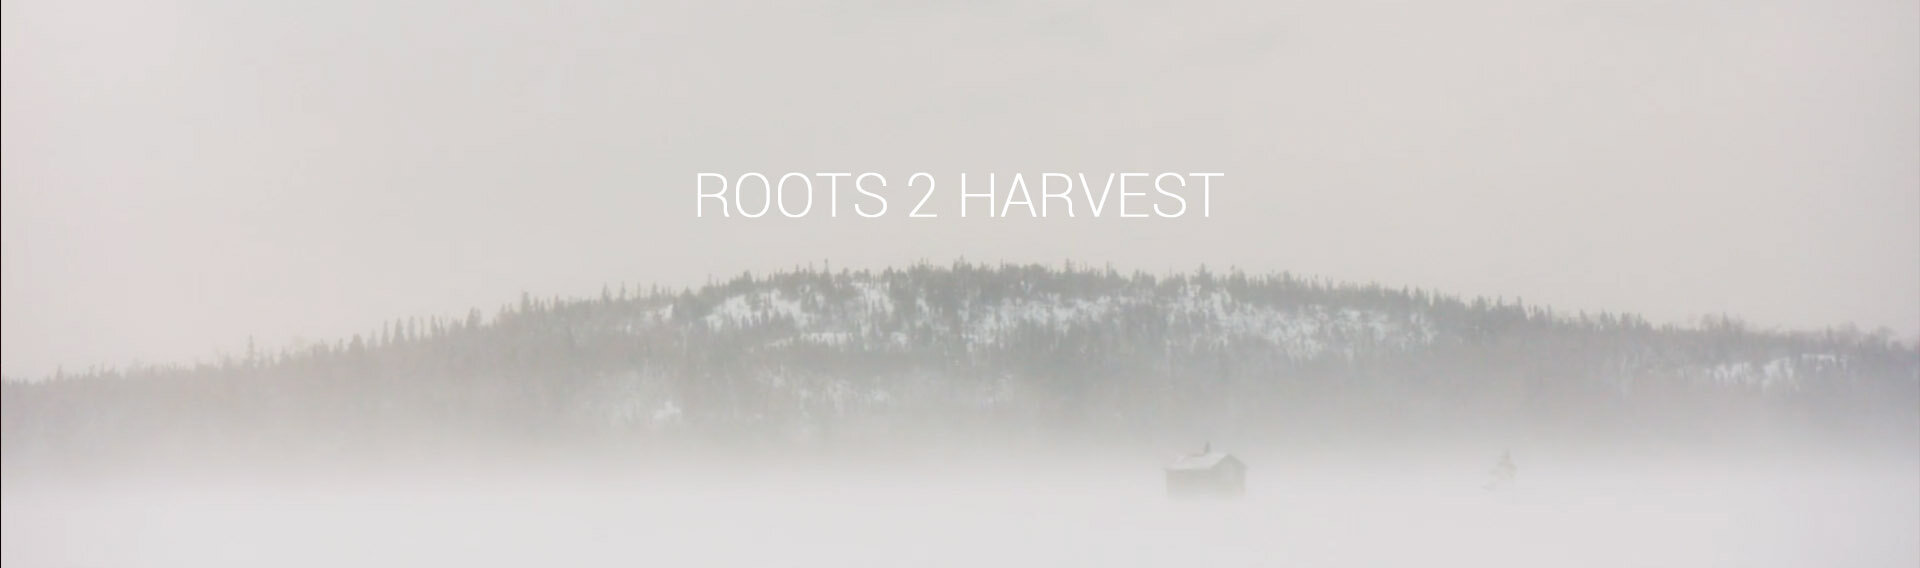 Roots 2 Harvest.jpg